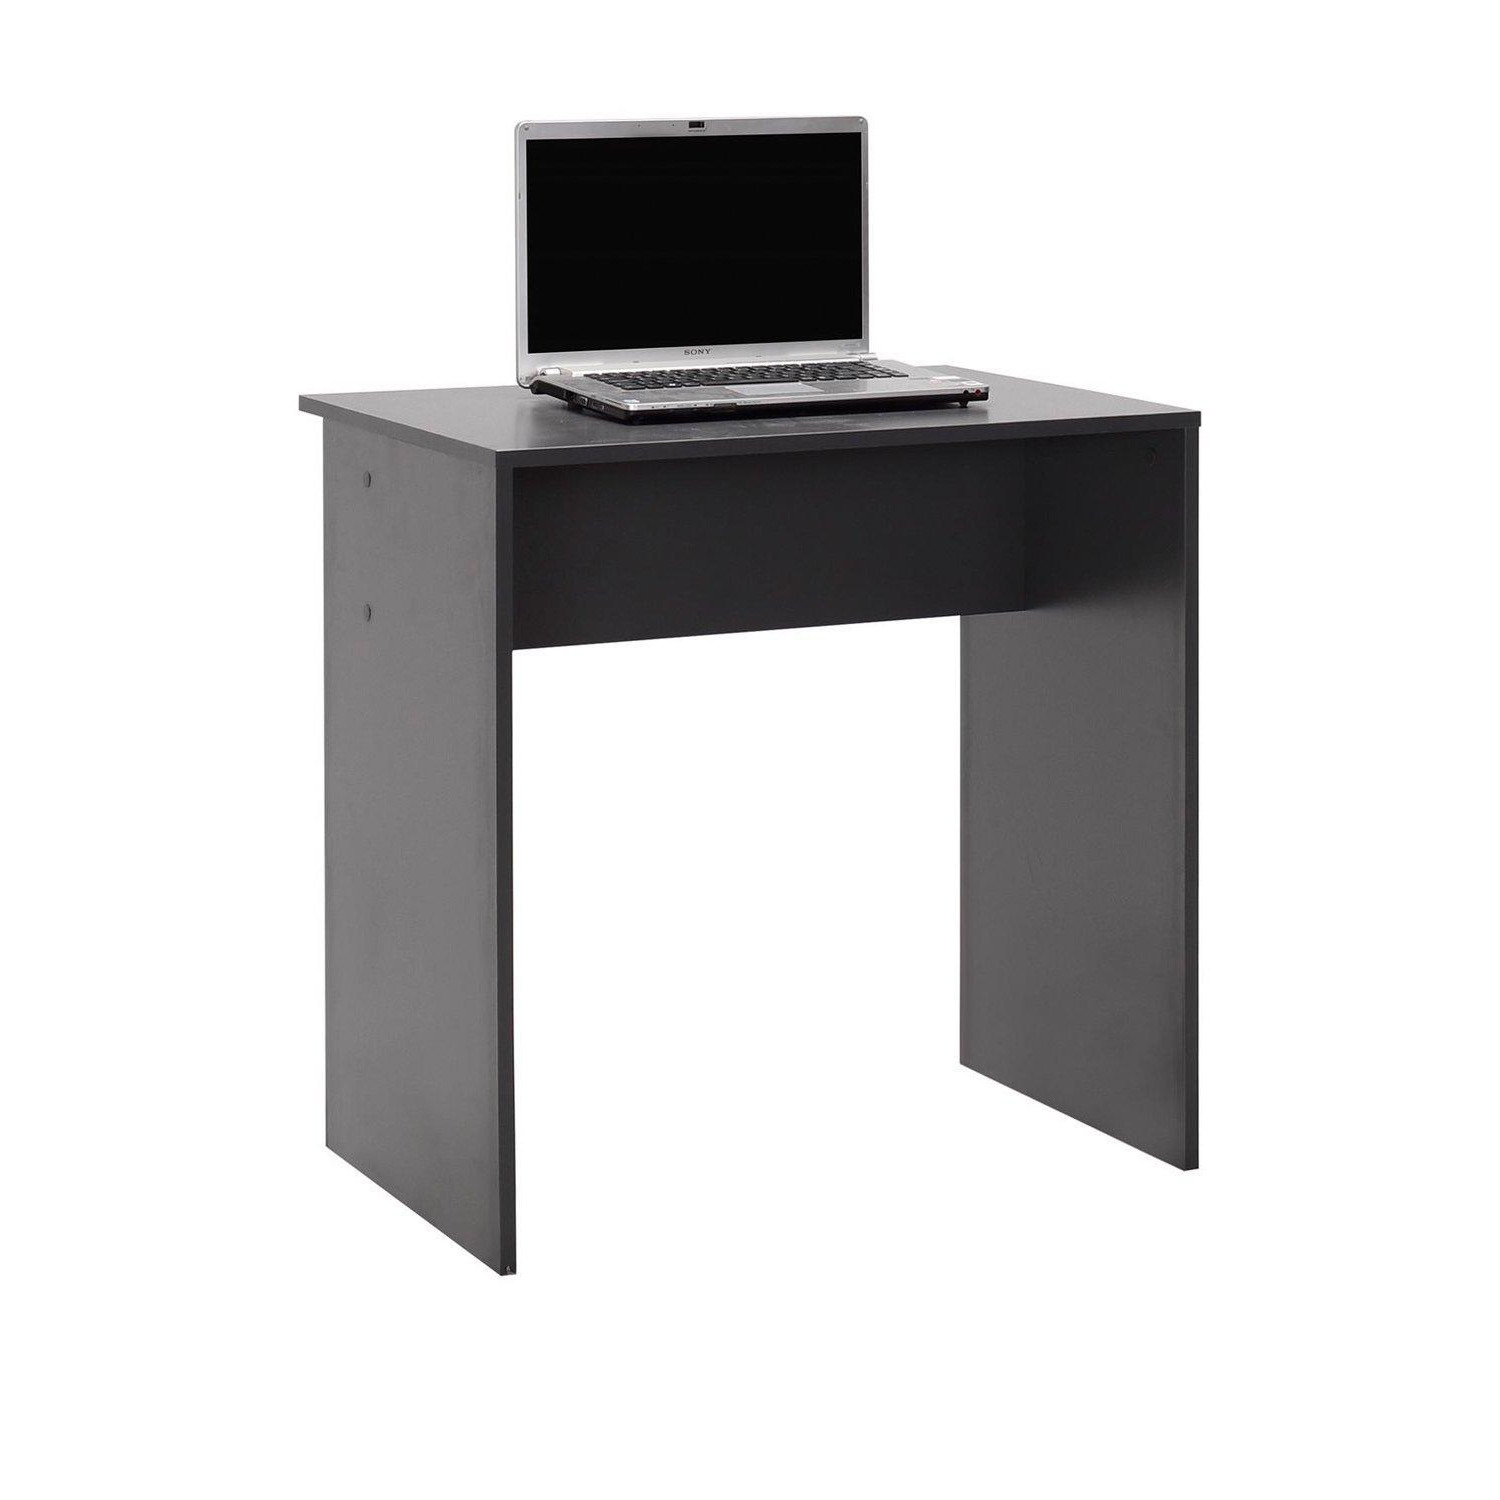 Simple Laptop Desk Anthracite Grey Finish - image 1